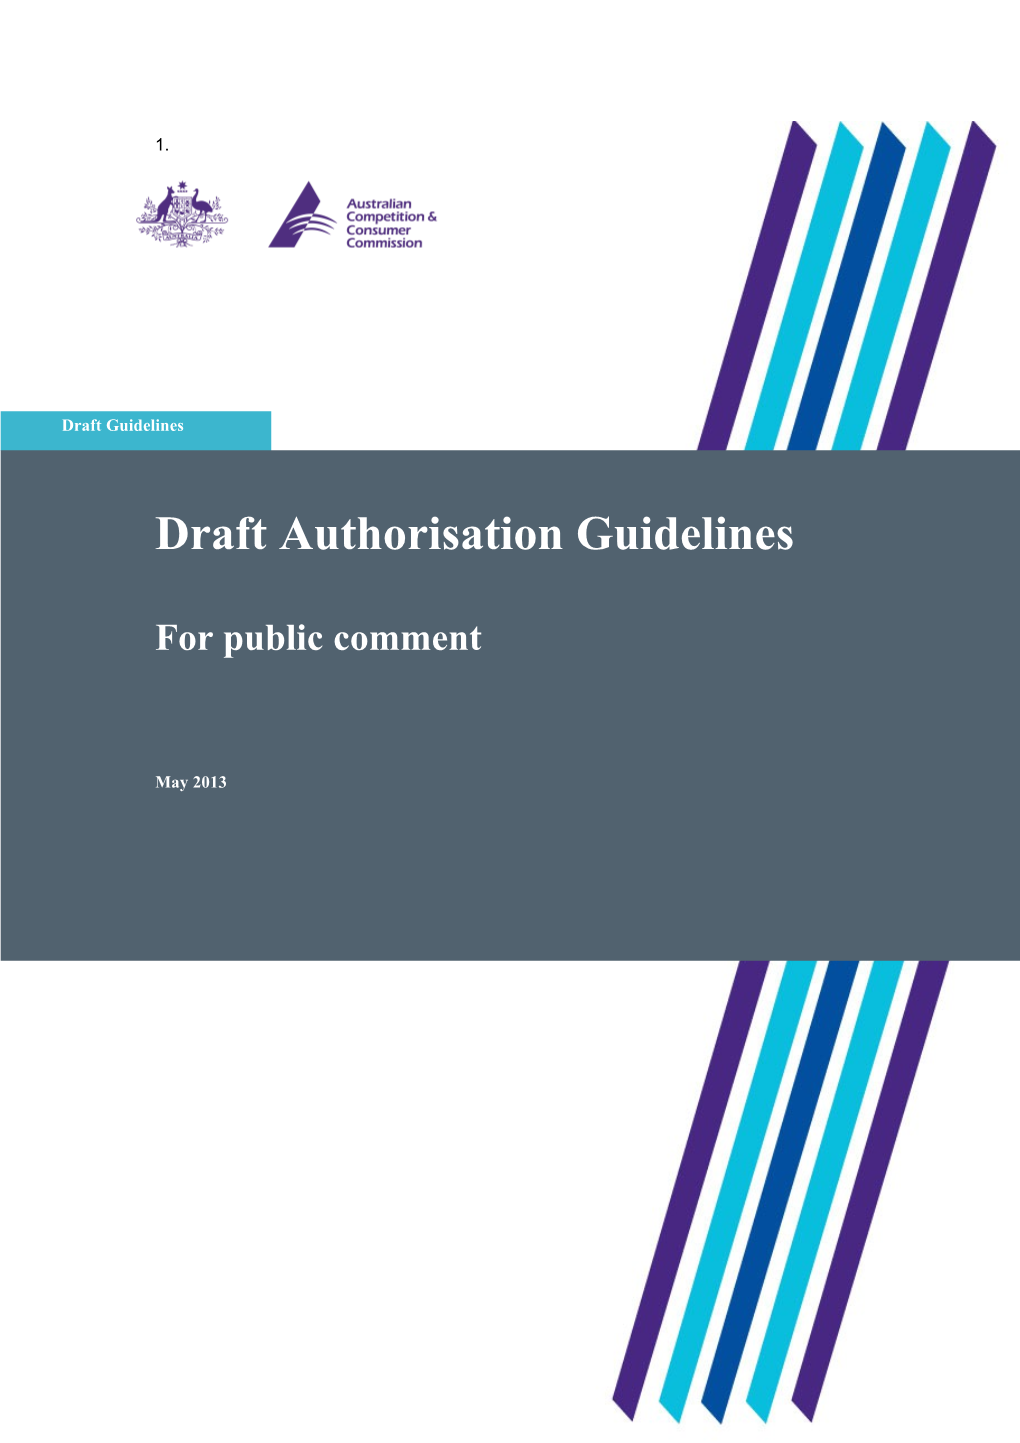 Draft Authorisation Guidelines for Public Comment